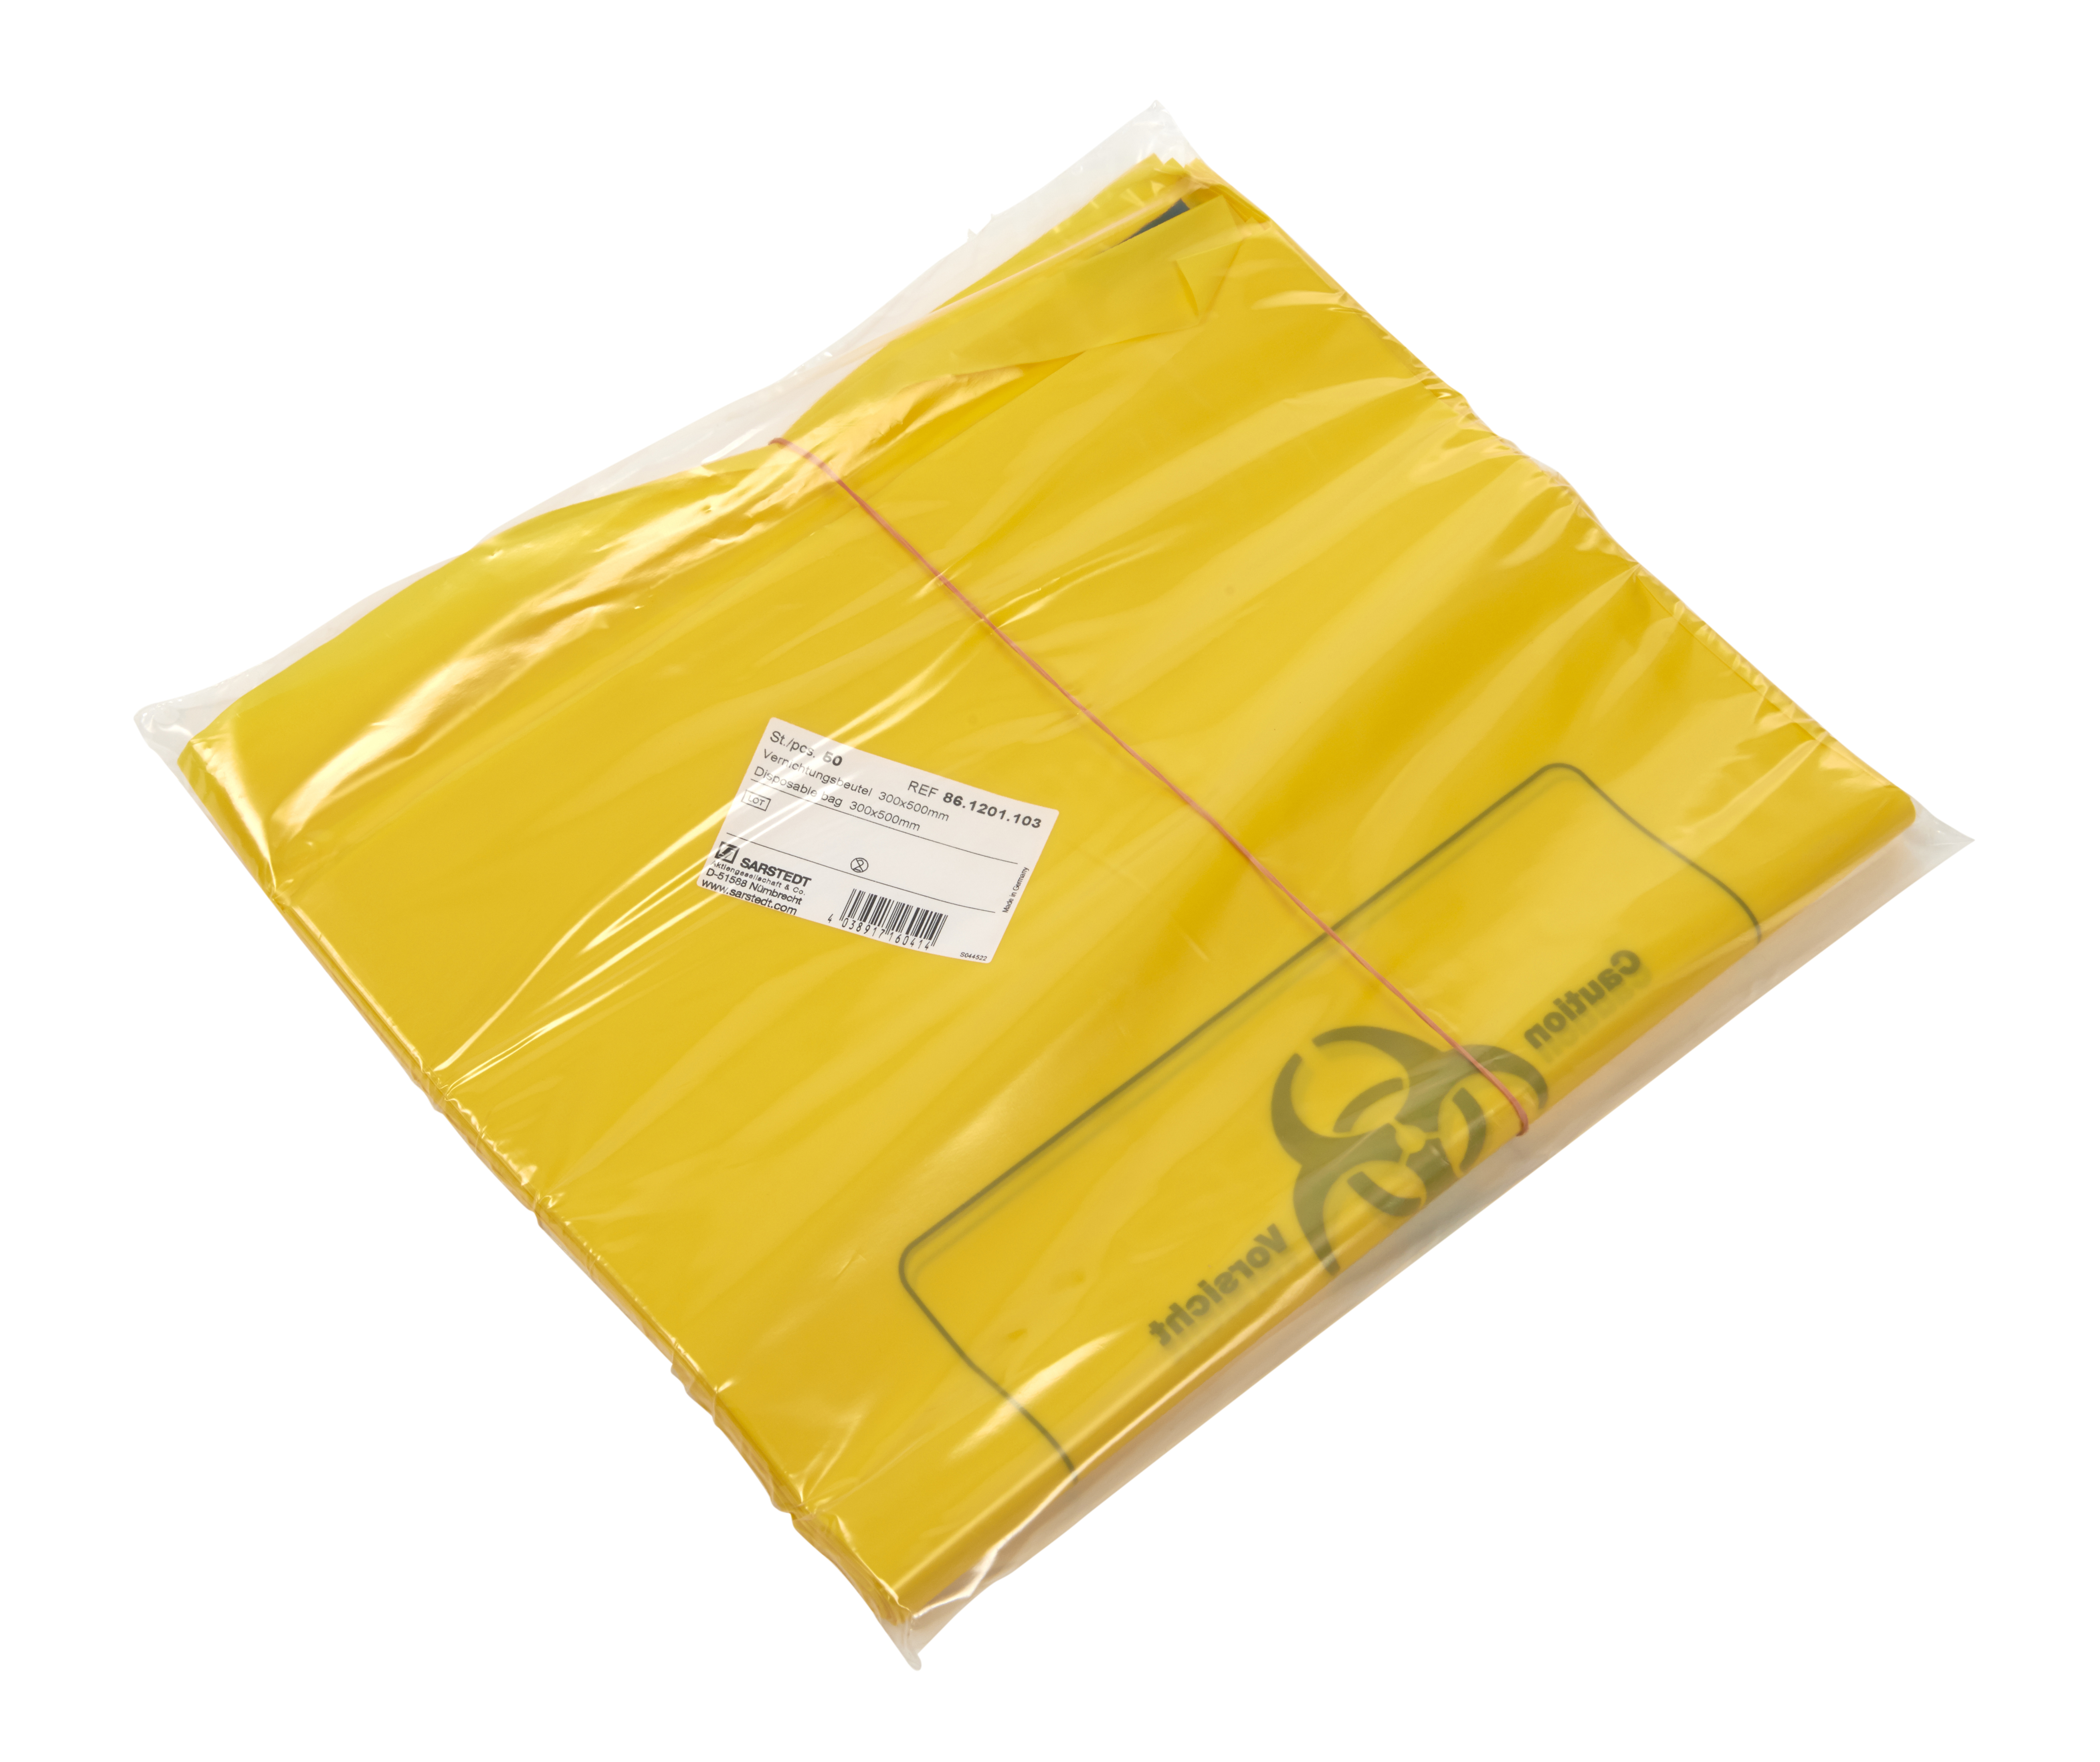 Autoklavepose, gule med BioHazard tryk, 300 x 500 mm, , 50 stk.
